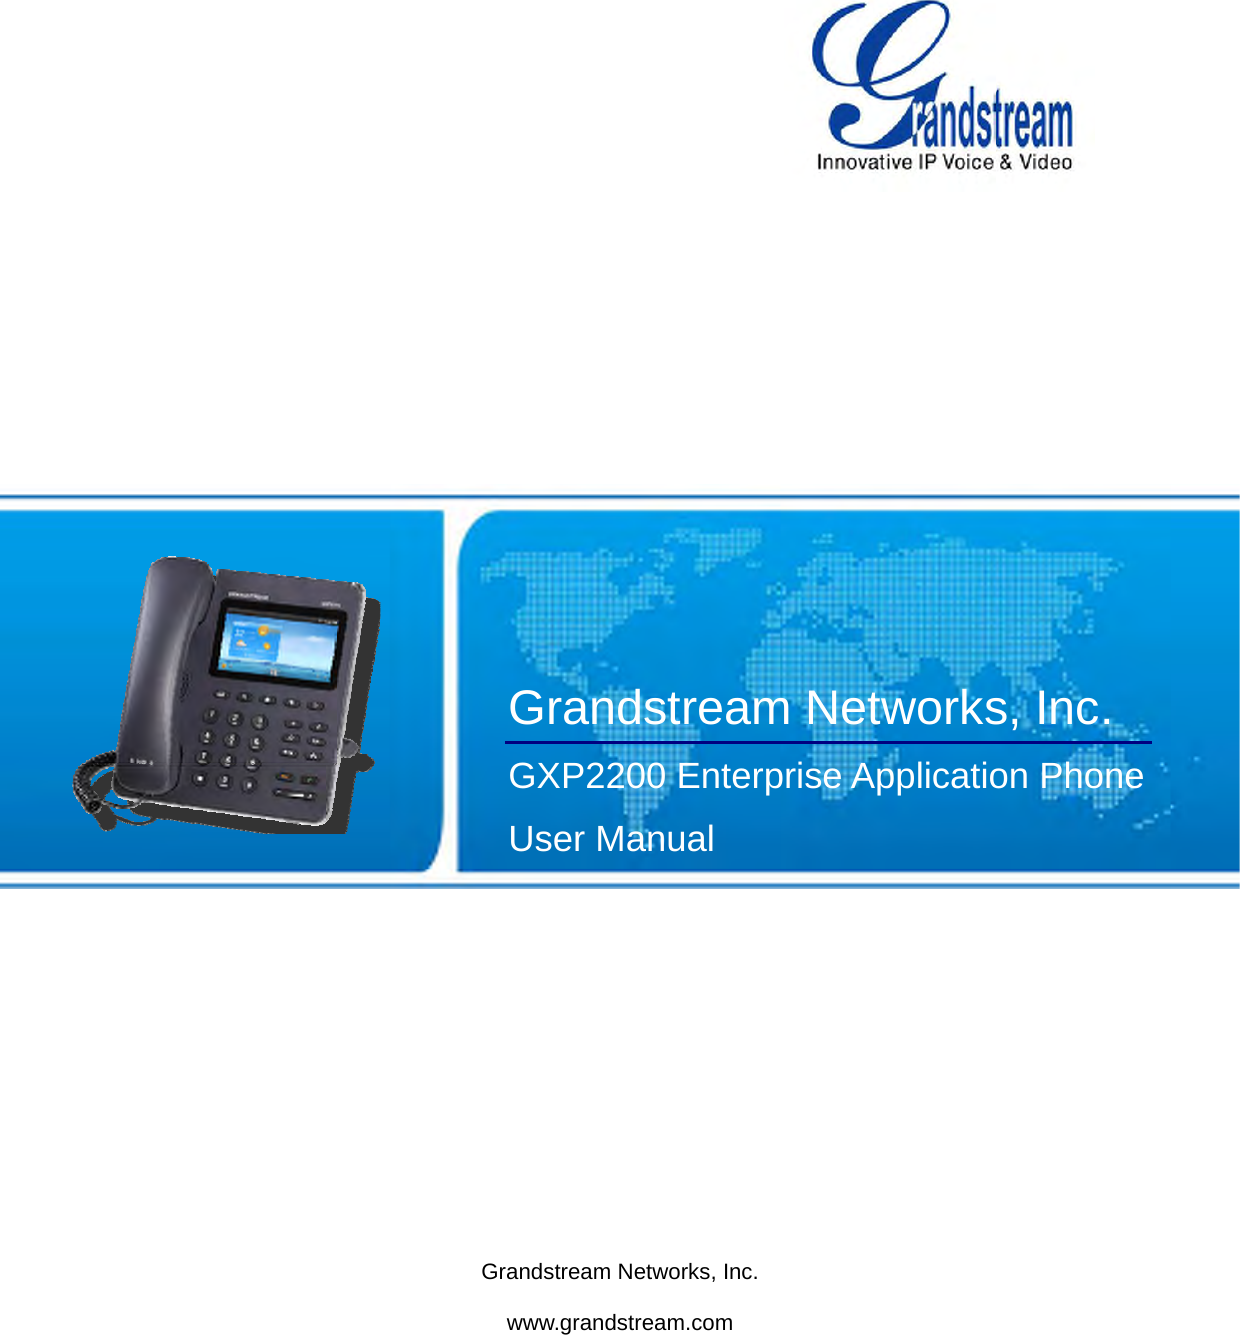 Grandstream Networks, Inc. www.grandstream.com               Grandstream Networks, Inc. GXP2200 Enterprise Application Phone User Manual